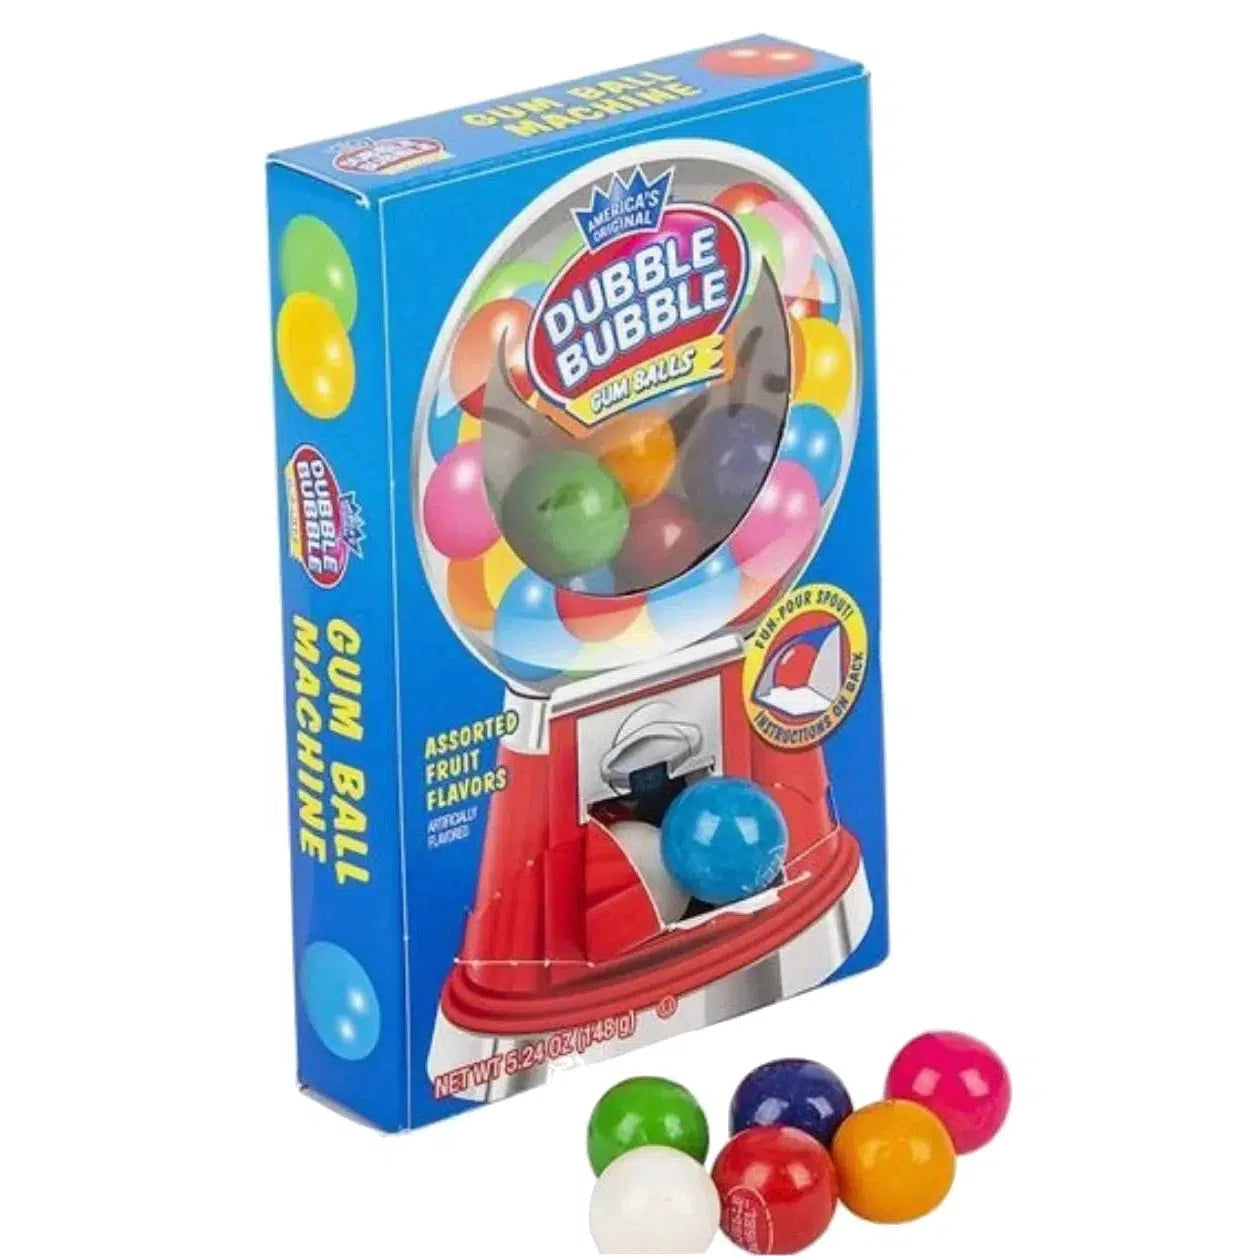 Dubble Bubble Gumball Machine 5.24 oz. Box